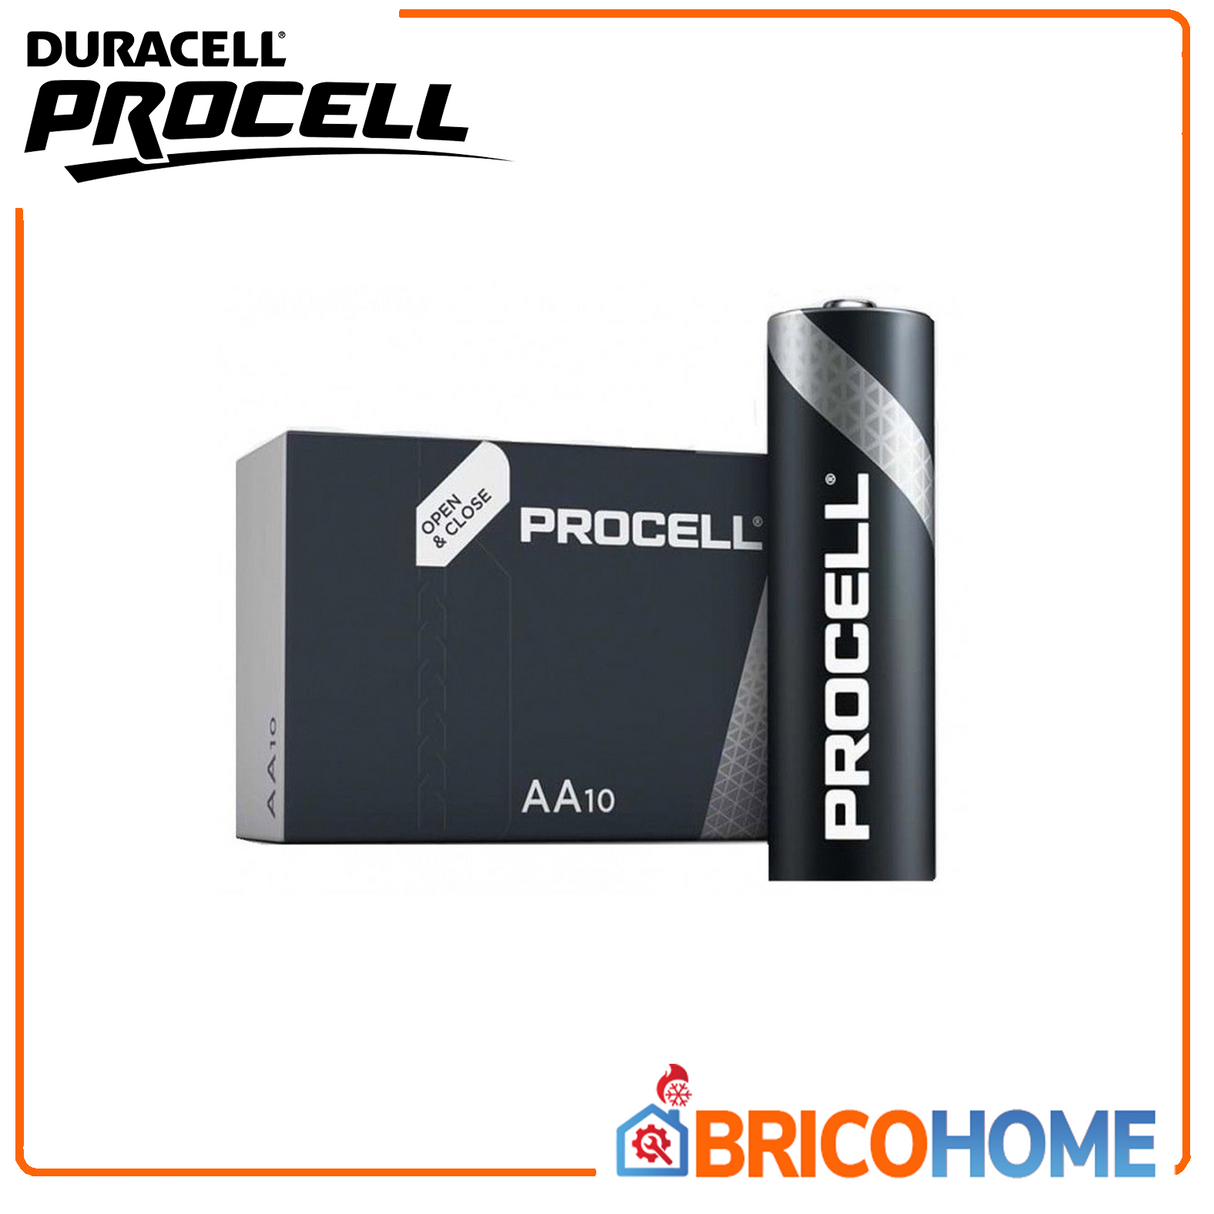 AA-Alkalibatterien in einer Box mit 10 Zellen – Procell/Duracell